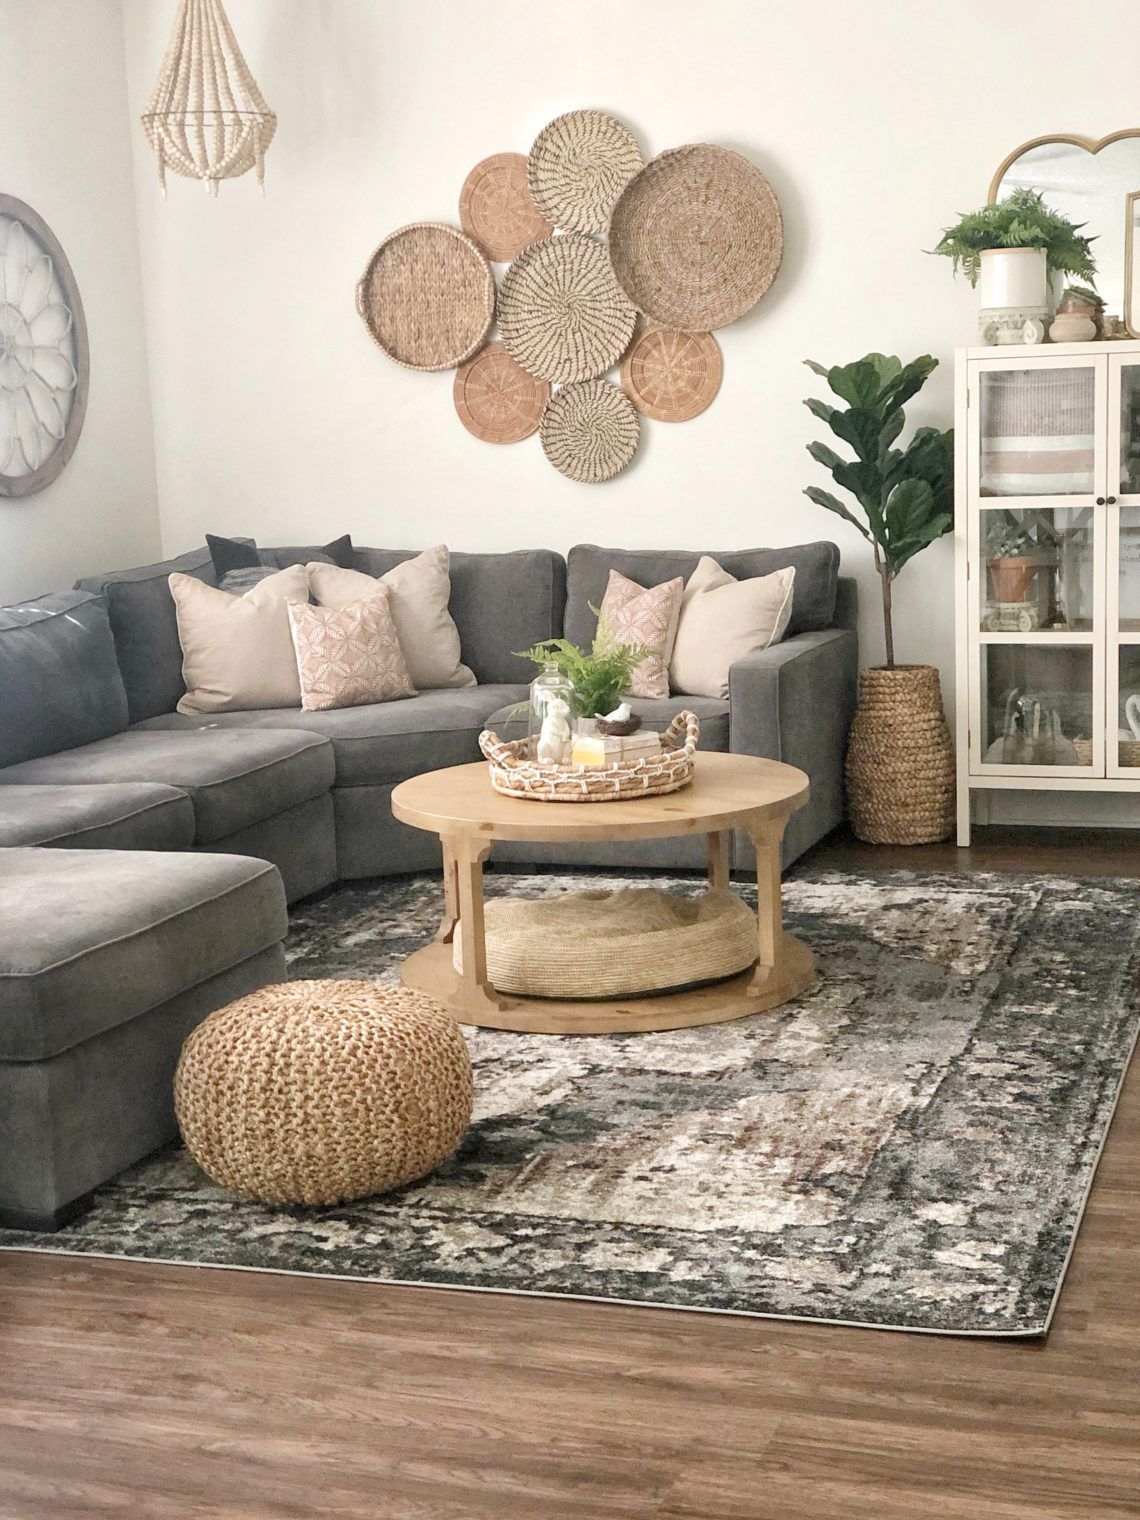 Aubrey Swan Blog | Home Decor on a Budget -   10 living room on a budget home decor ideas